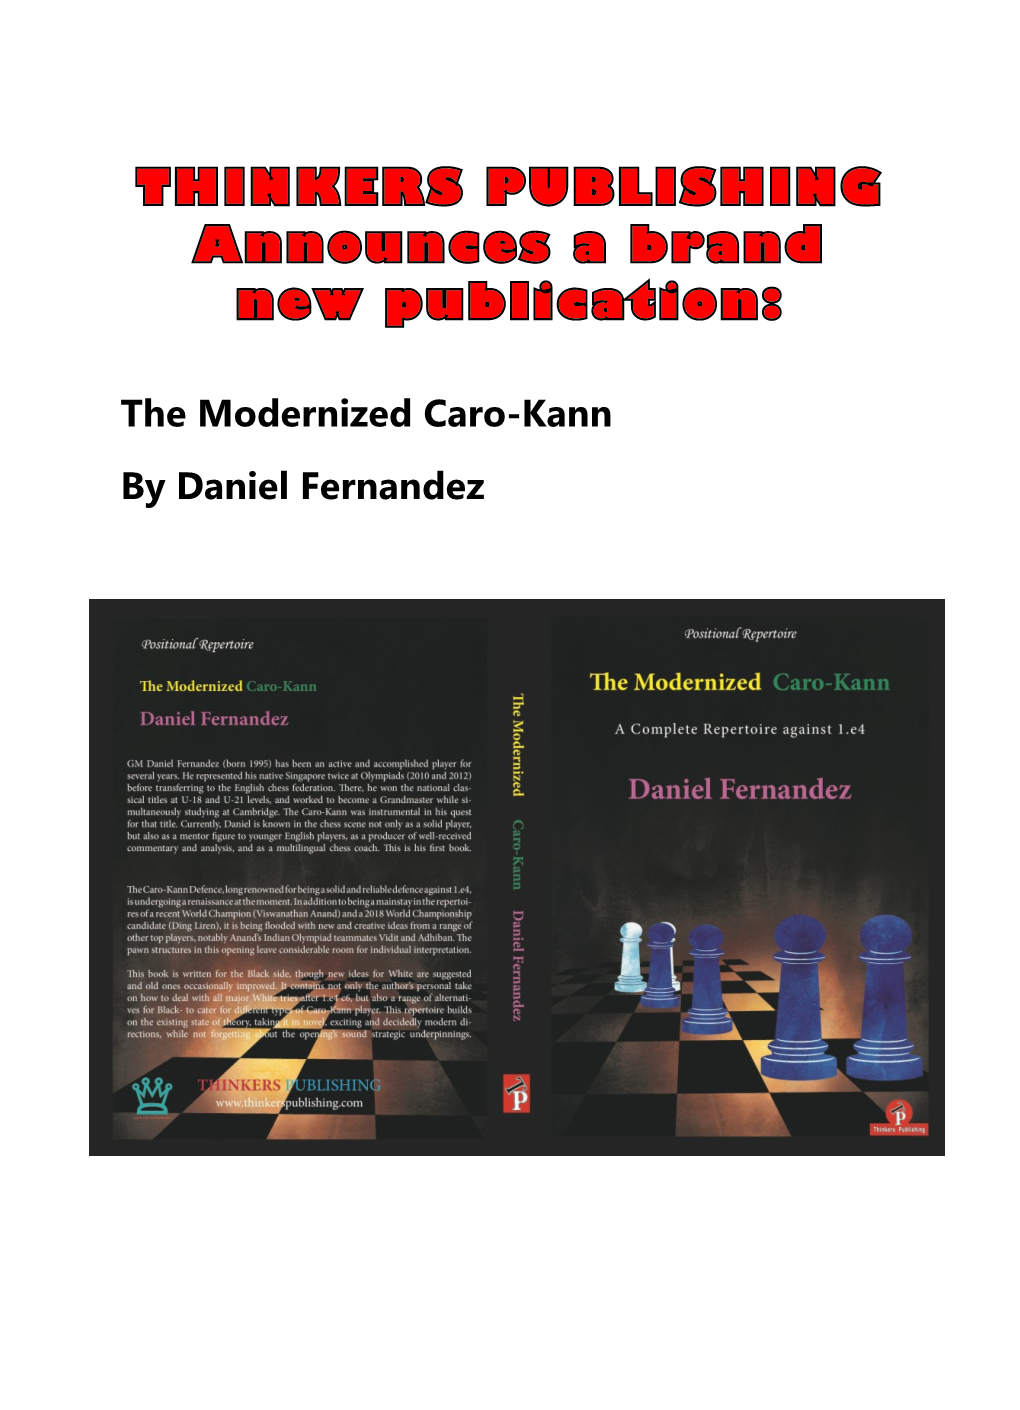 The Modernized Caro-Kann by Daniel Fernandez